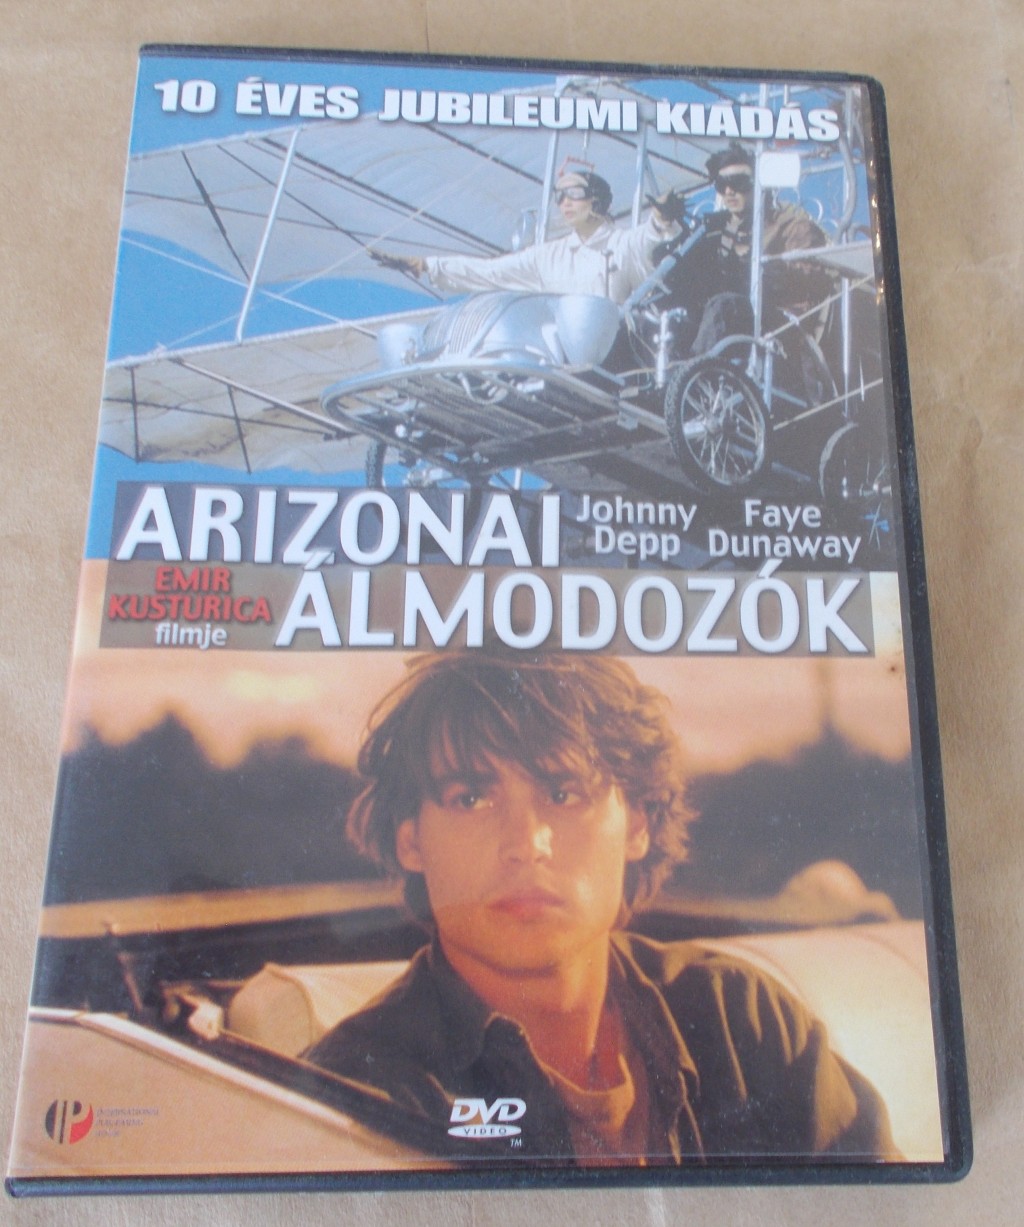 Arizóniai álmodozók eredeti DVD film

Arizóniai álmodozók eredeti DVD film
10 éves Jubillemumi kiadás
Johnny Deepp
Faye Dunaway
Emir Kusturica filmje




